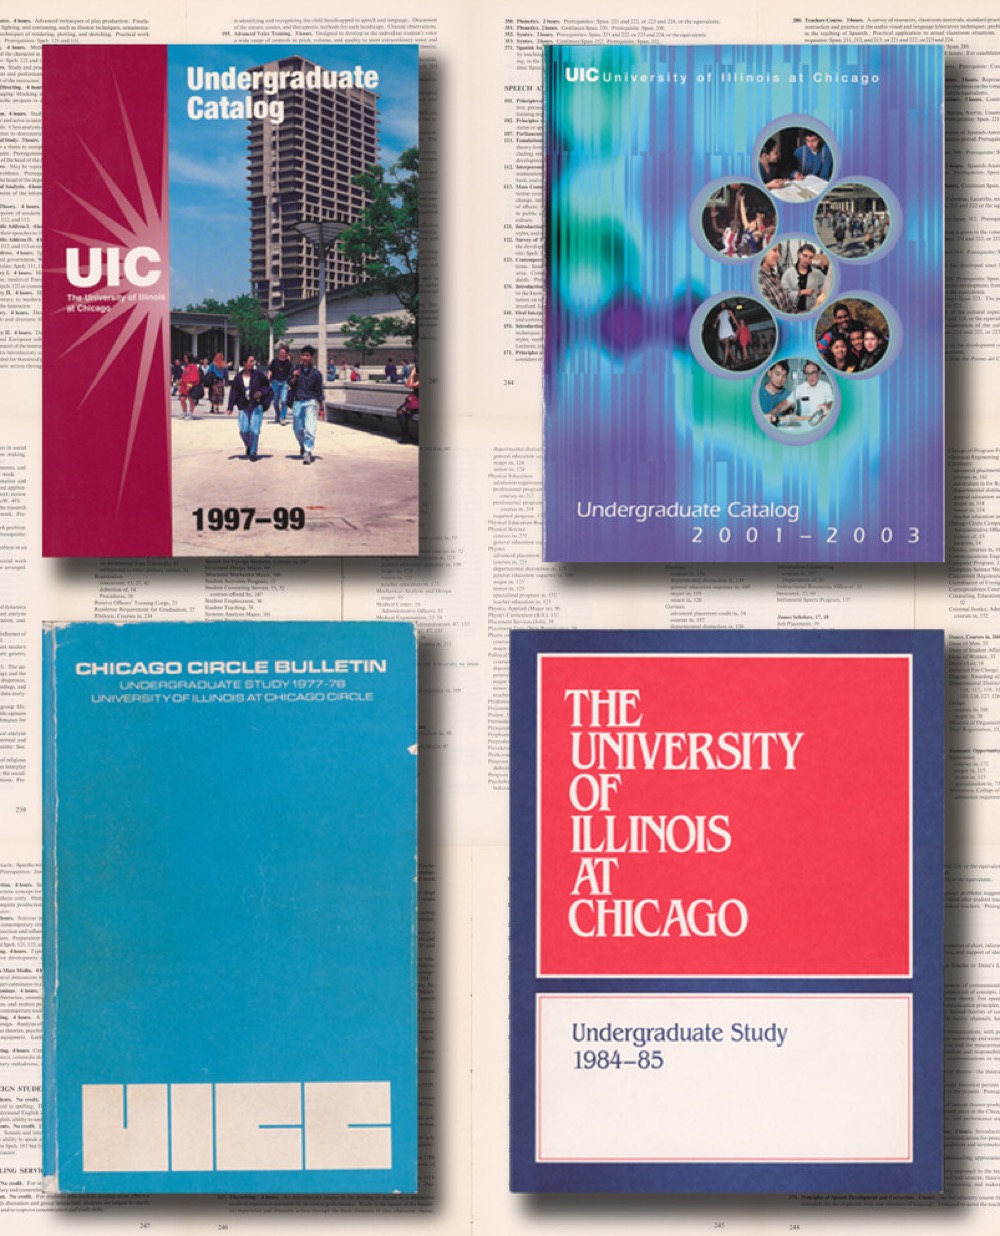 Image of UIC undergraduate catalog covers